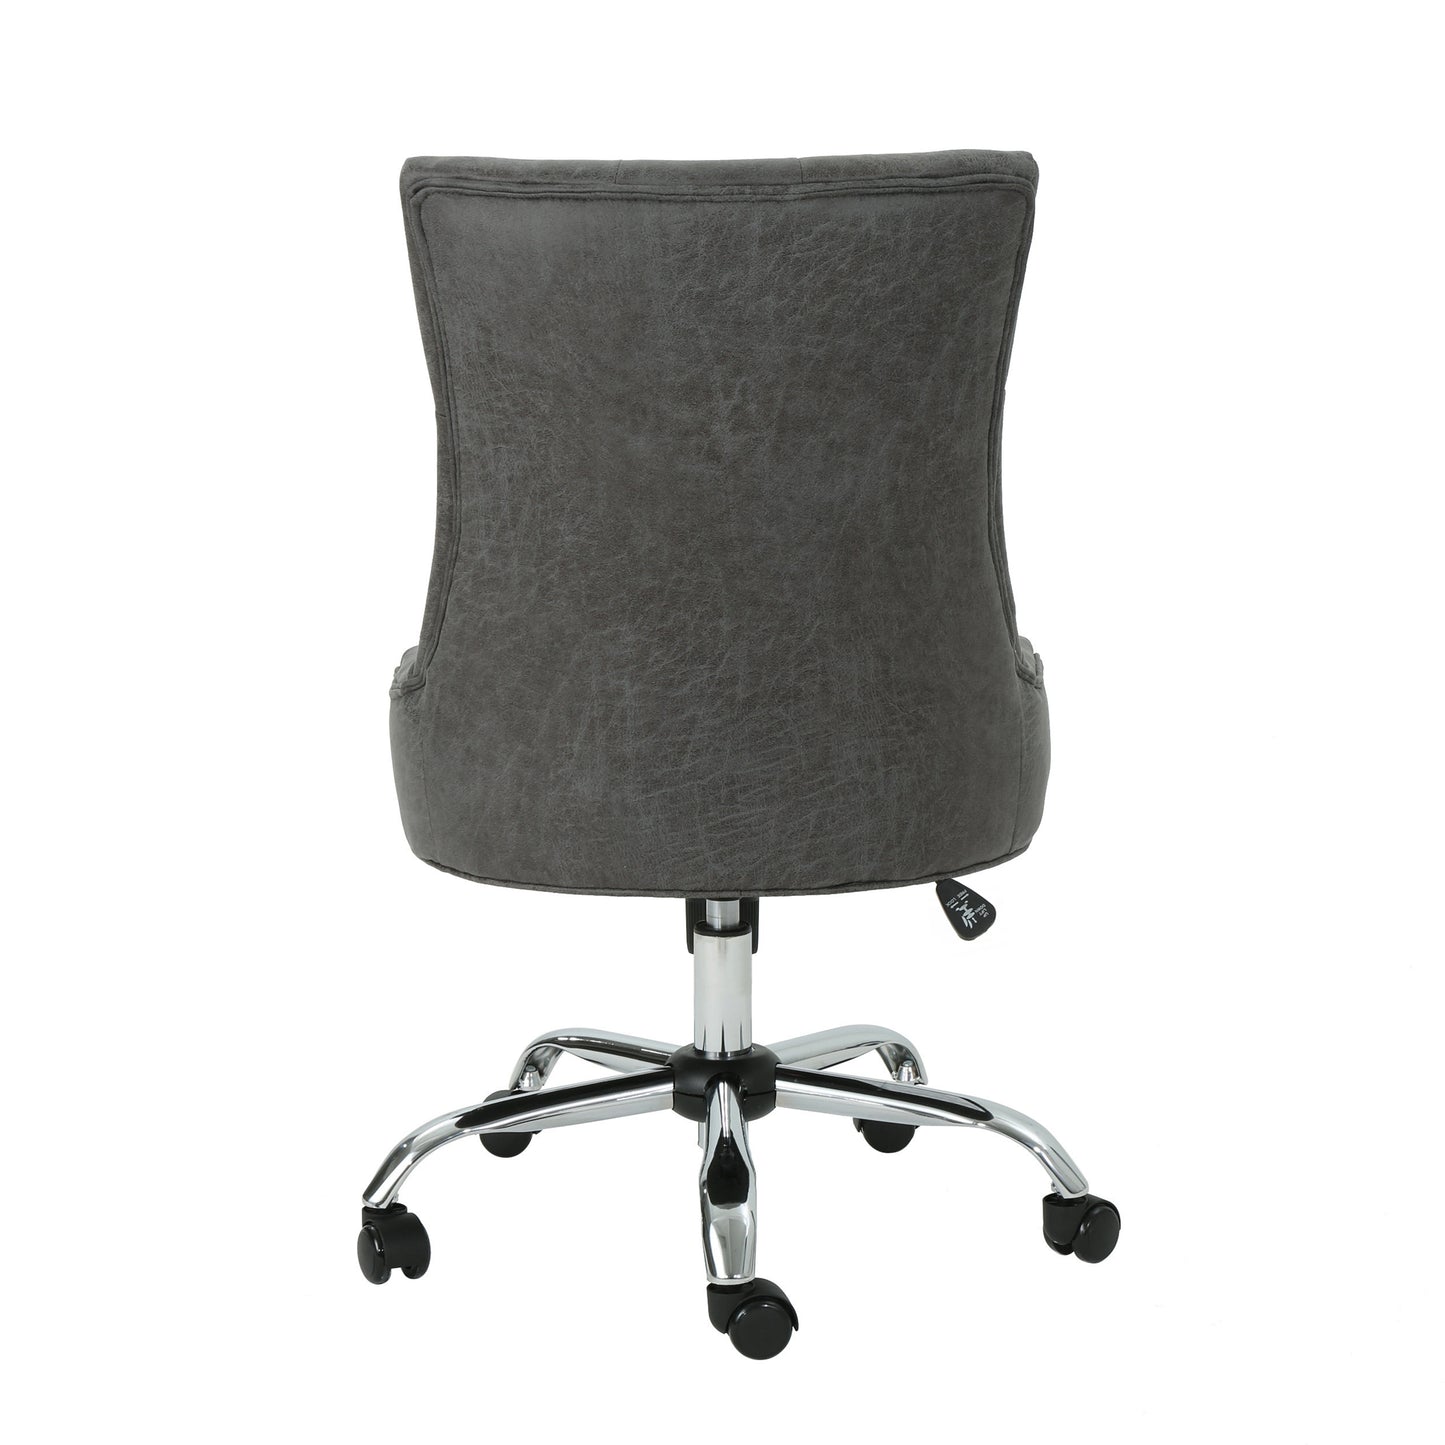 Bagnold Home Office Microfiber Desk Chair